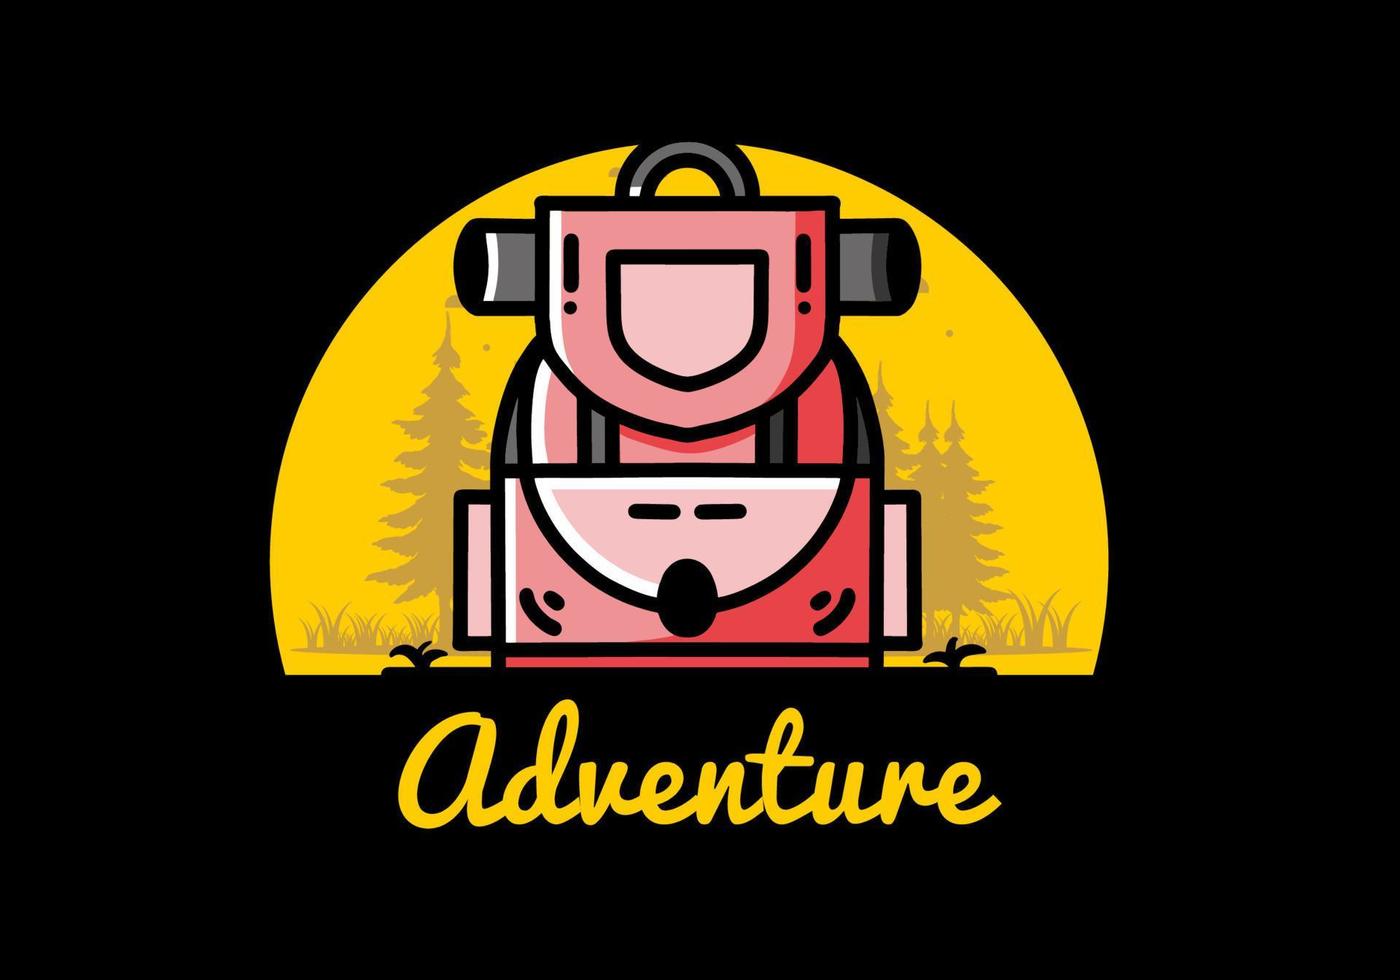 Simple camping bag illustration design vector